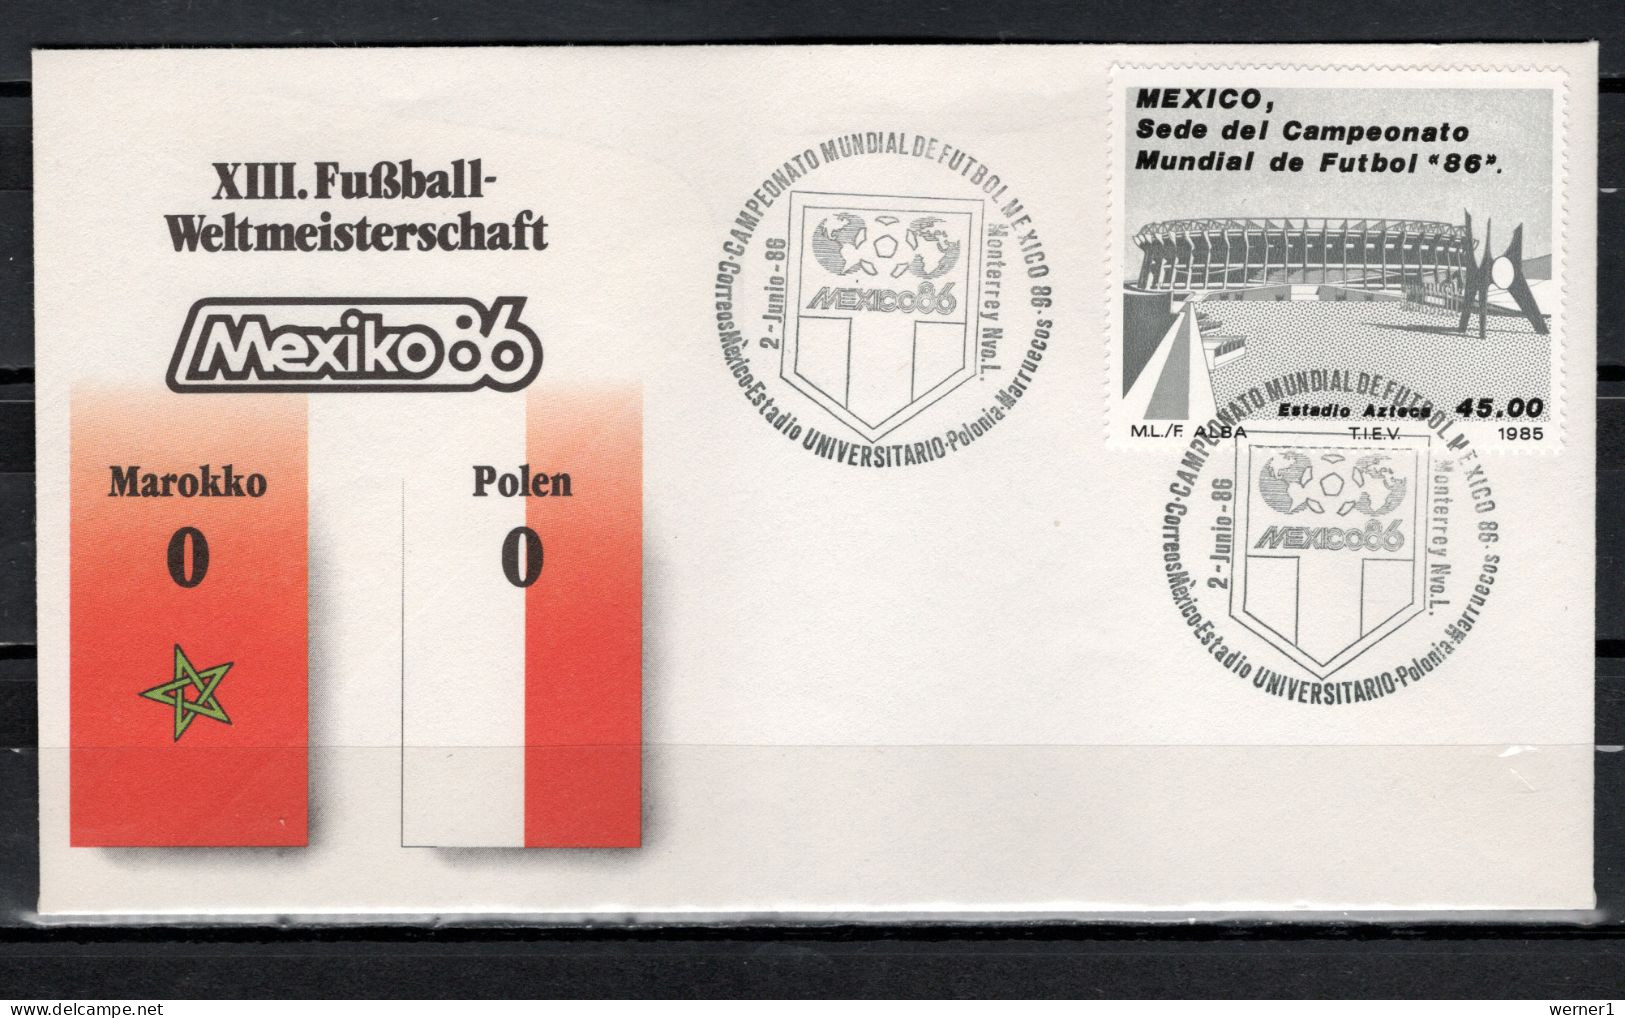 Mexico 1986 Football Soccer World Cup Commemorative Cover Match Morocco - Poland 0 : 0 - 1986 – Mexico